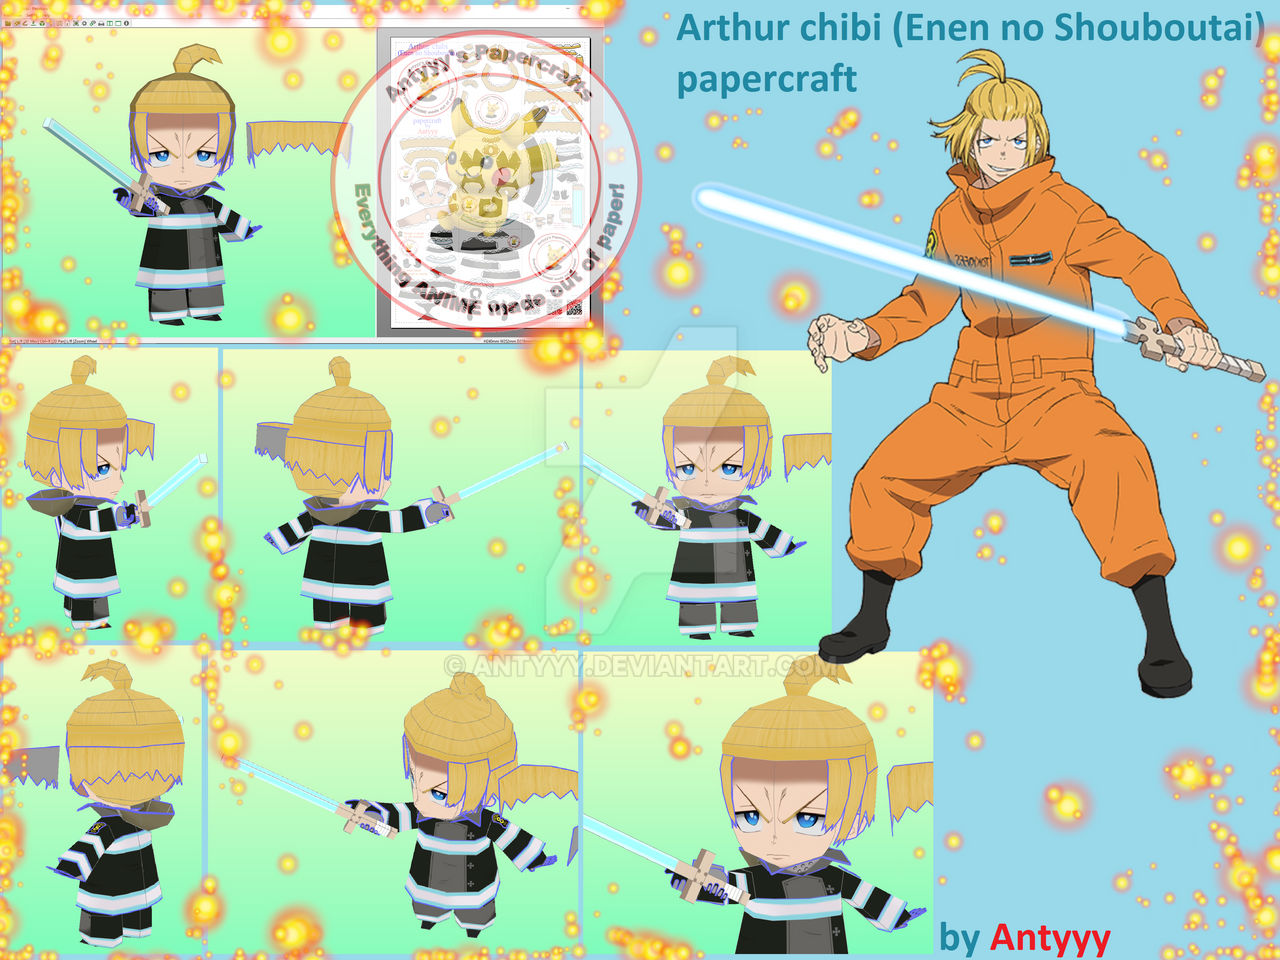 Arthur, Fire Force(enen no shoubotai)